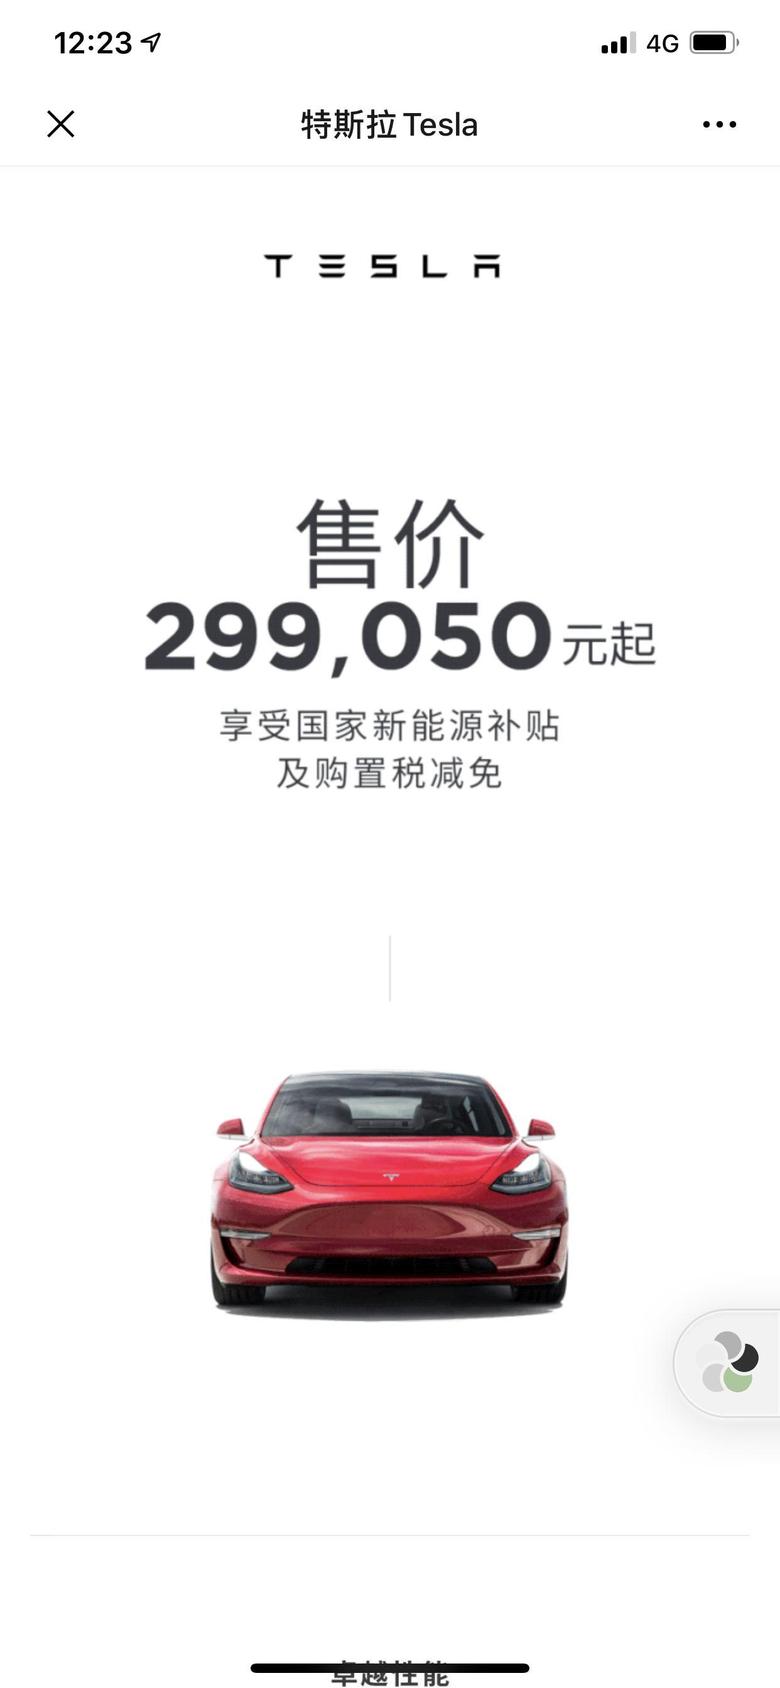 model 3 一条重要消息，特斯拉在上海工厂生产的Model3在享受新能源补贴后，起售价格为299050元。不知道国产其他电动车品牌在看到这个这个消息后，有没有感受到一股寒意。